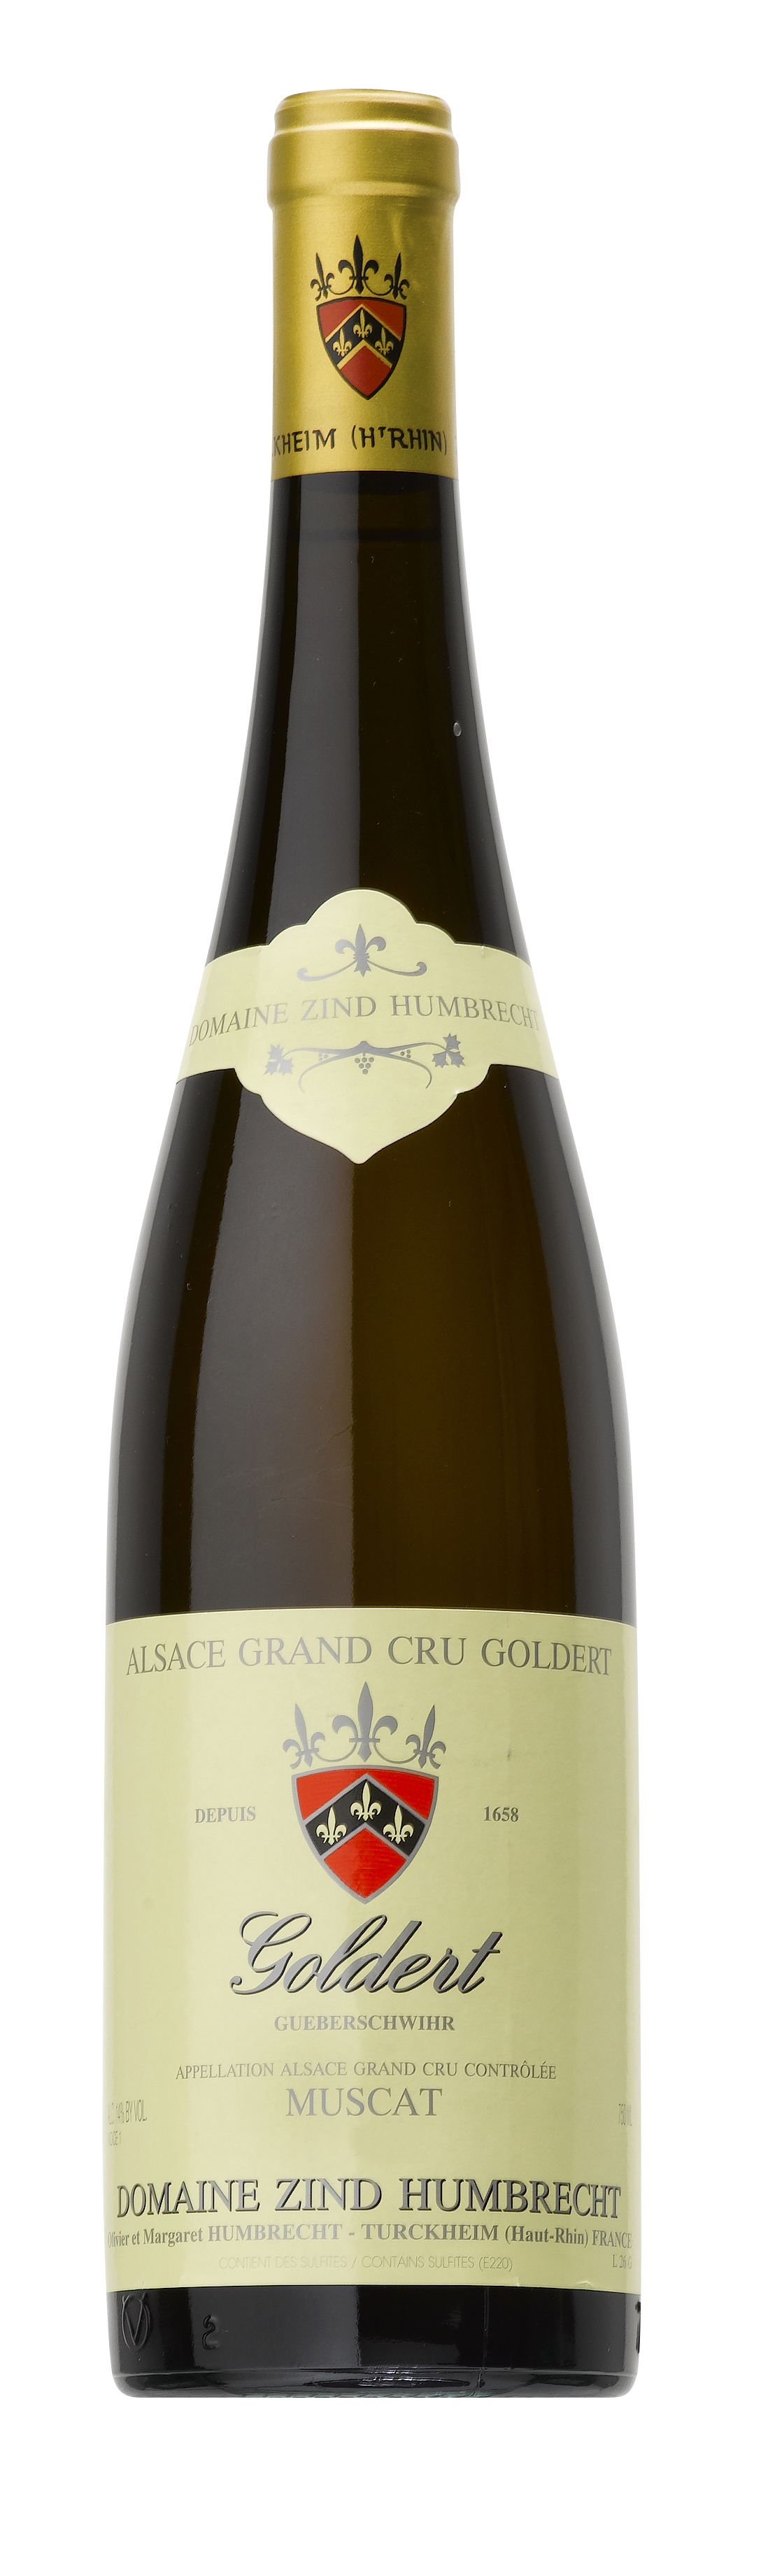 Pinot gris clos jebsal domaine zind humbrecht 1996  Alsace, Slection Alsace